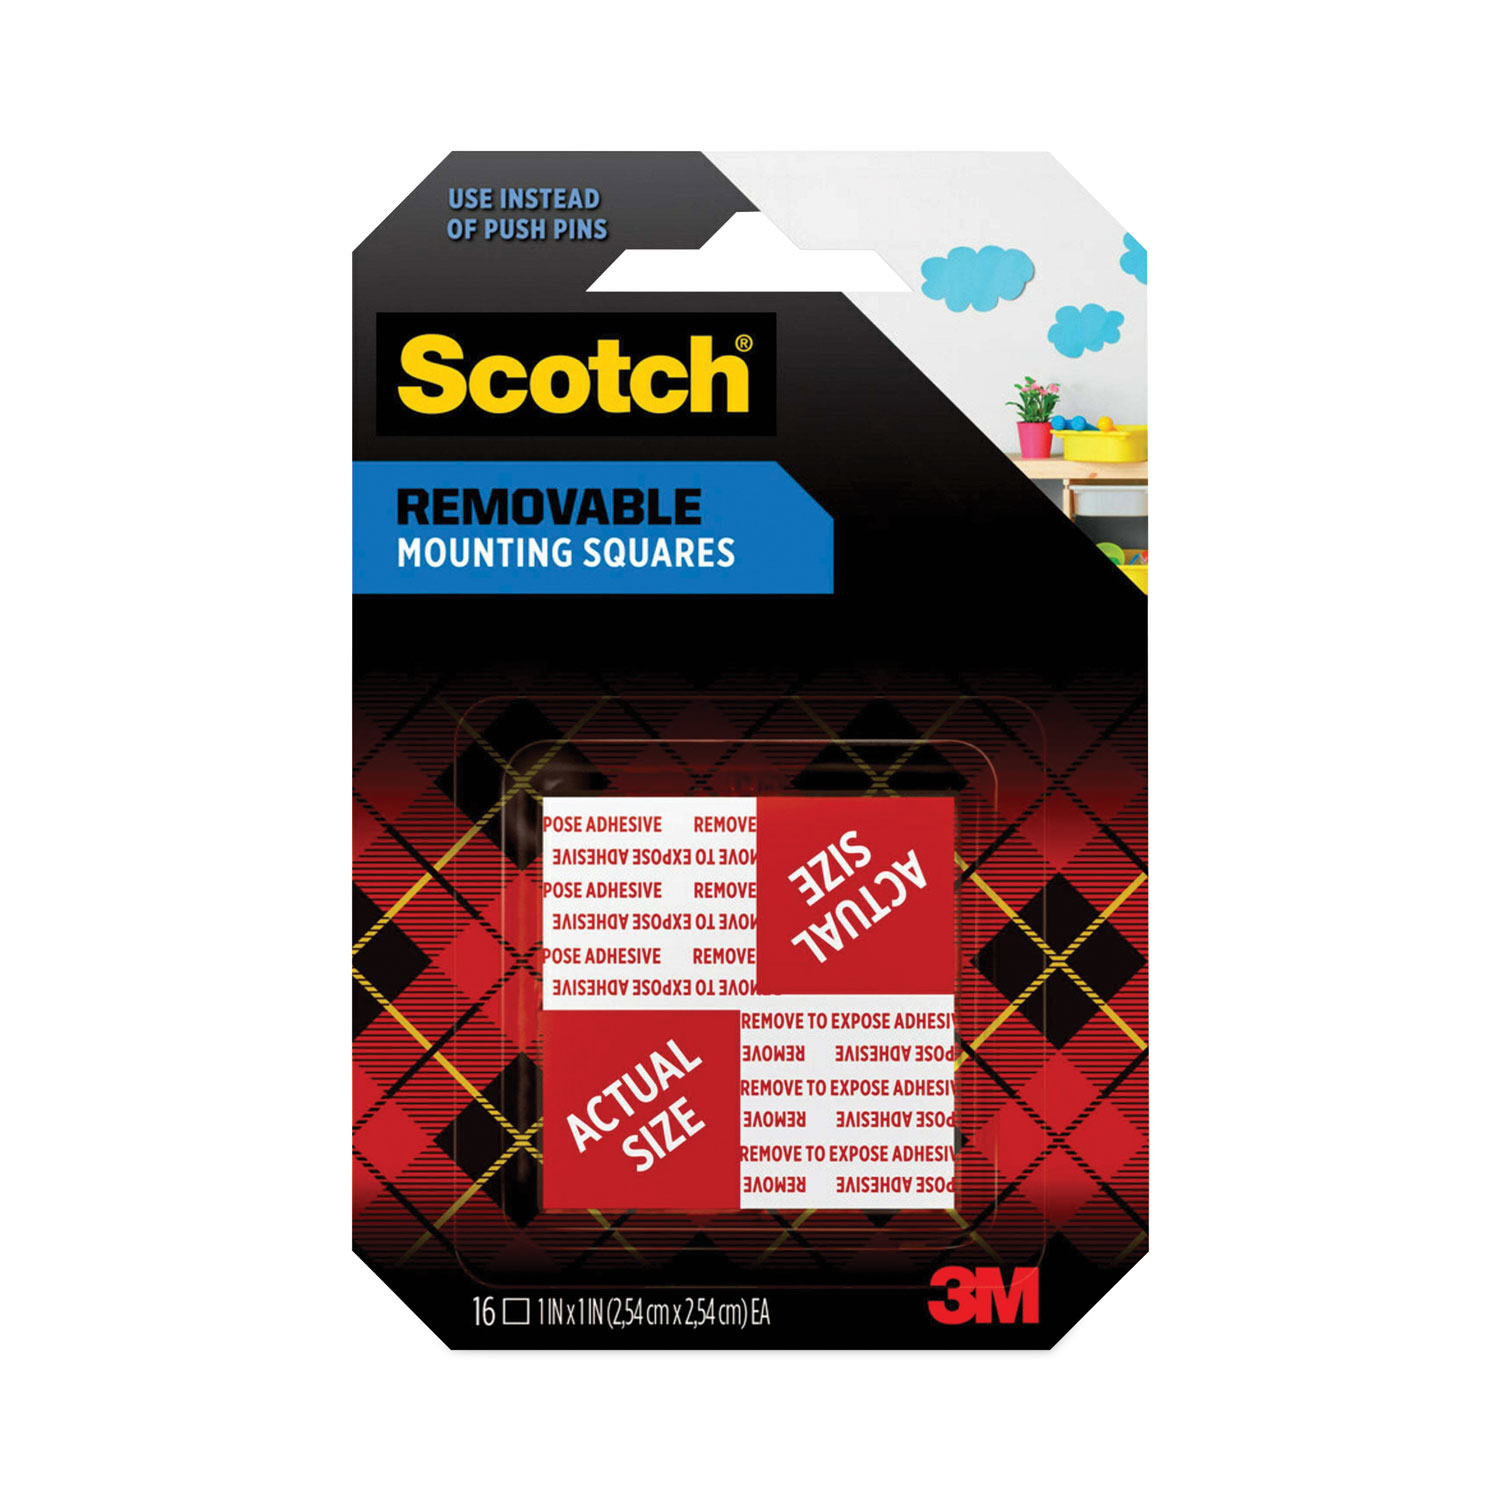 Scotch Removable Mounting Putty 2 oz. White 12 Packs (MMM860-12